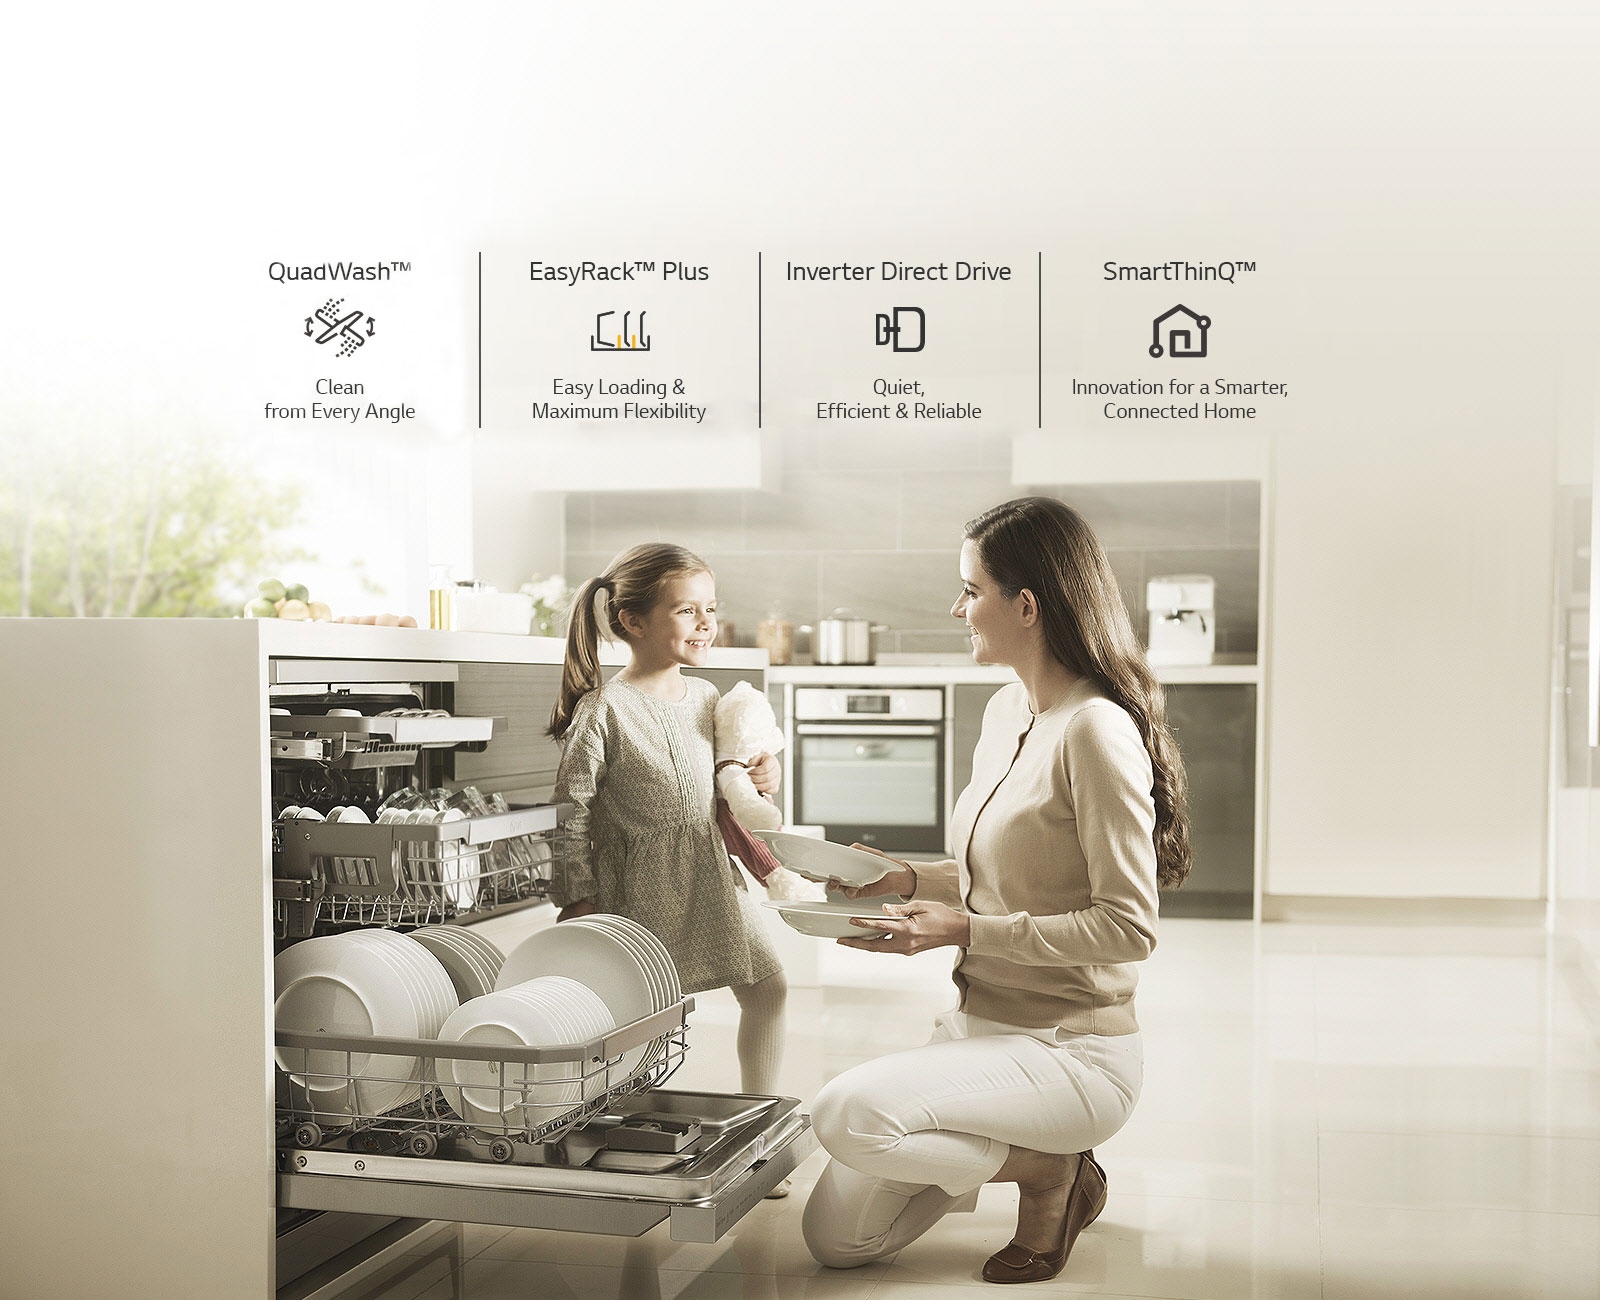 Reasons to Buy LG Dishwasher